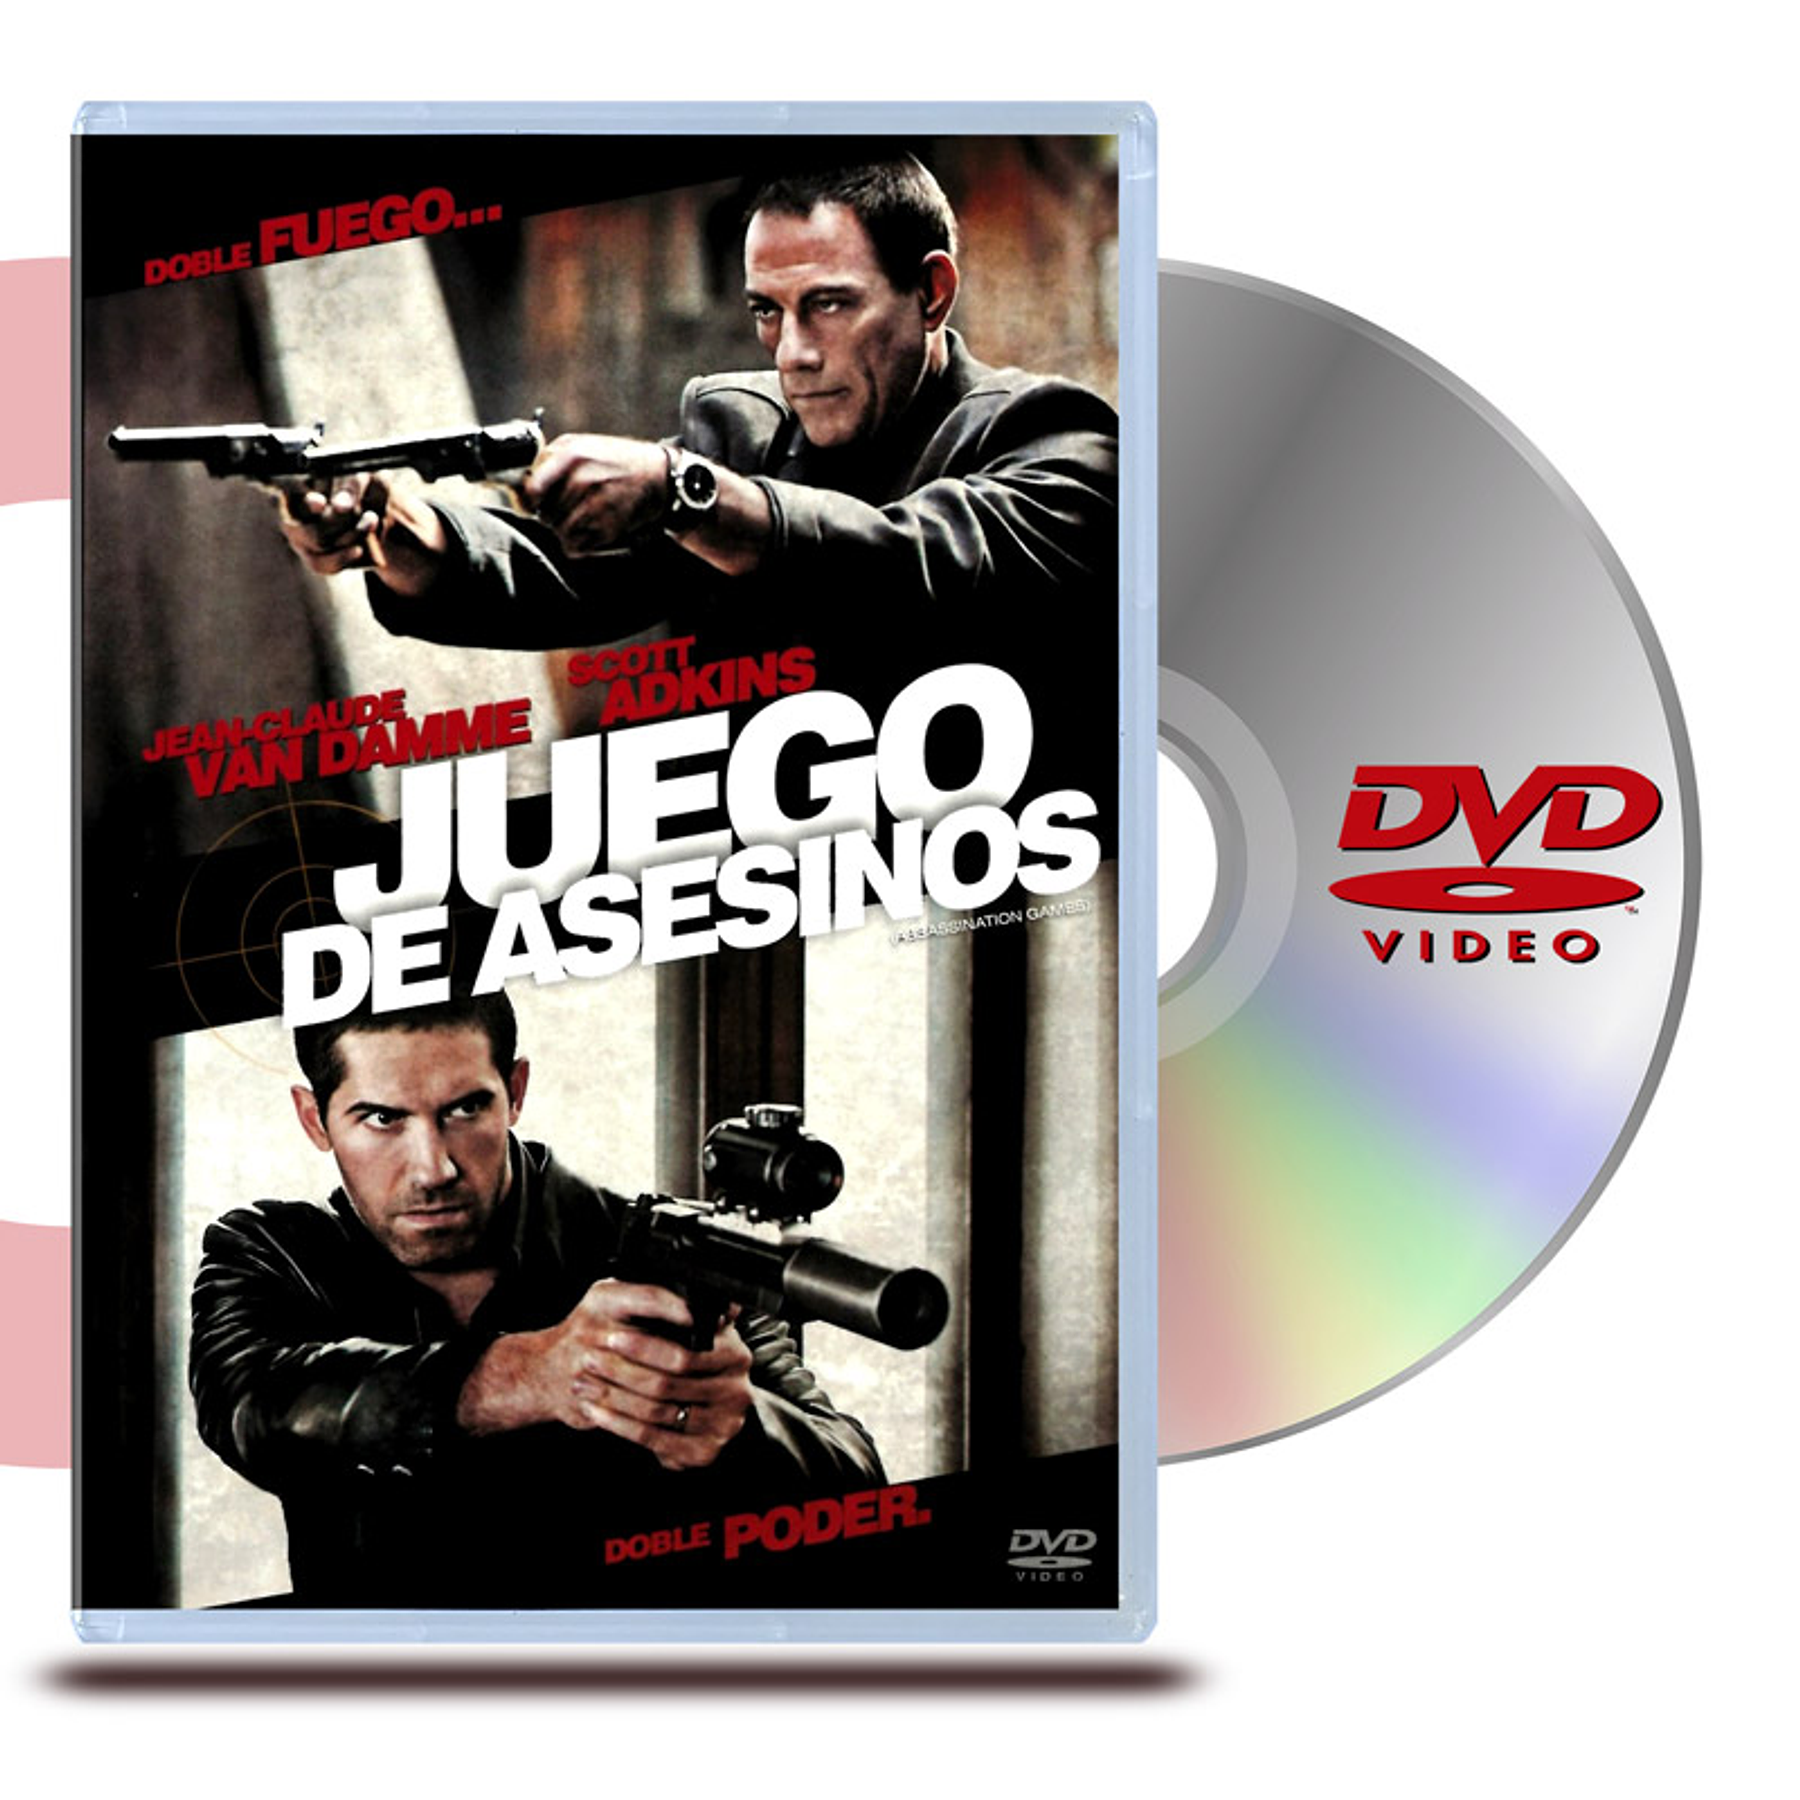 DVD JUEGOS DE ASESINOS